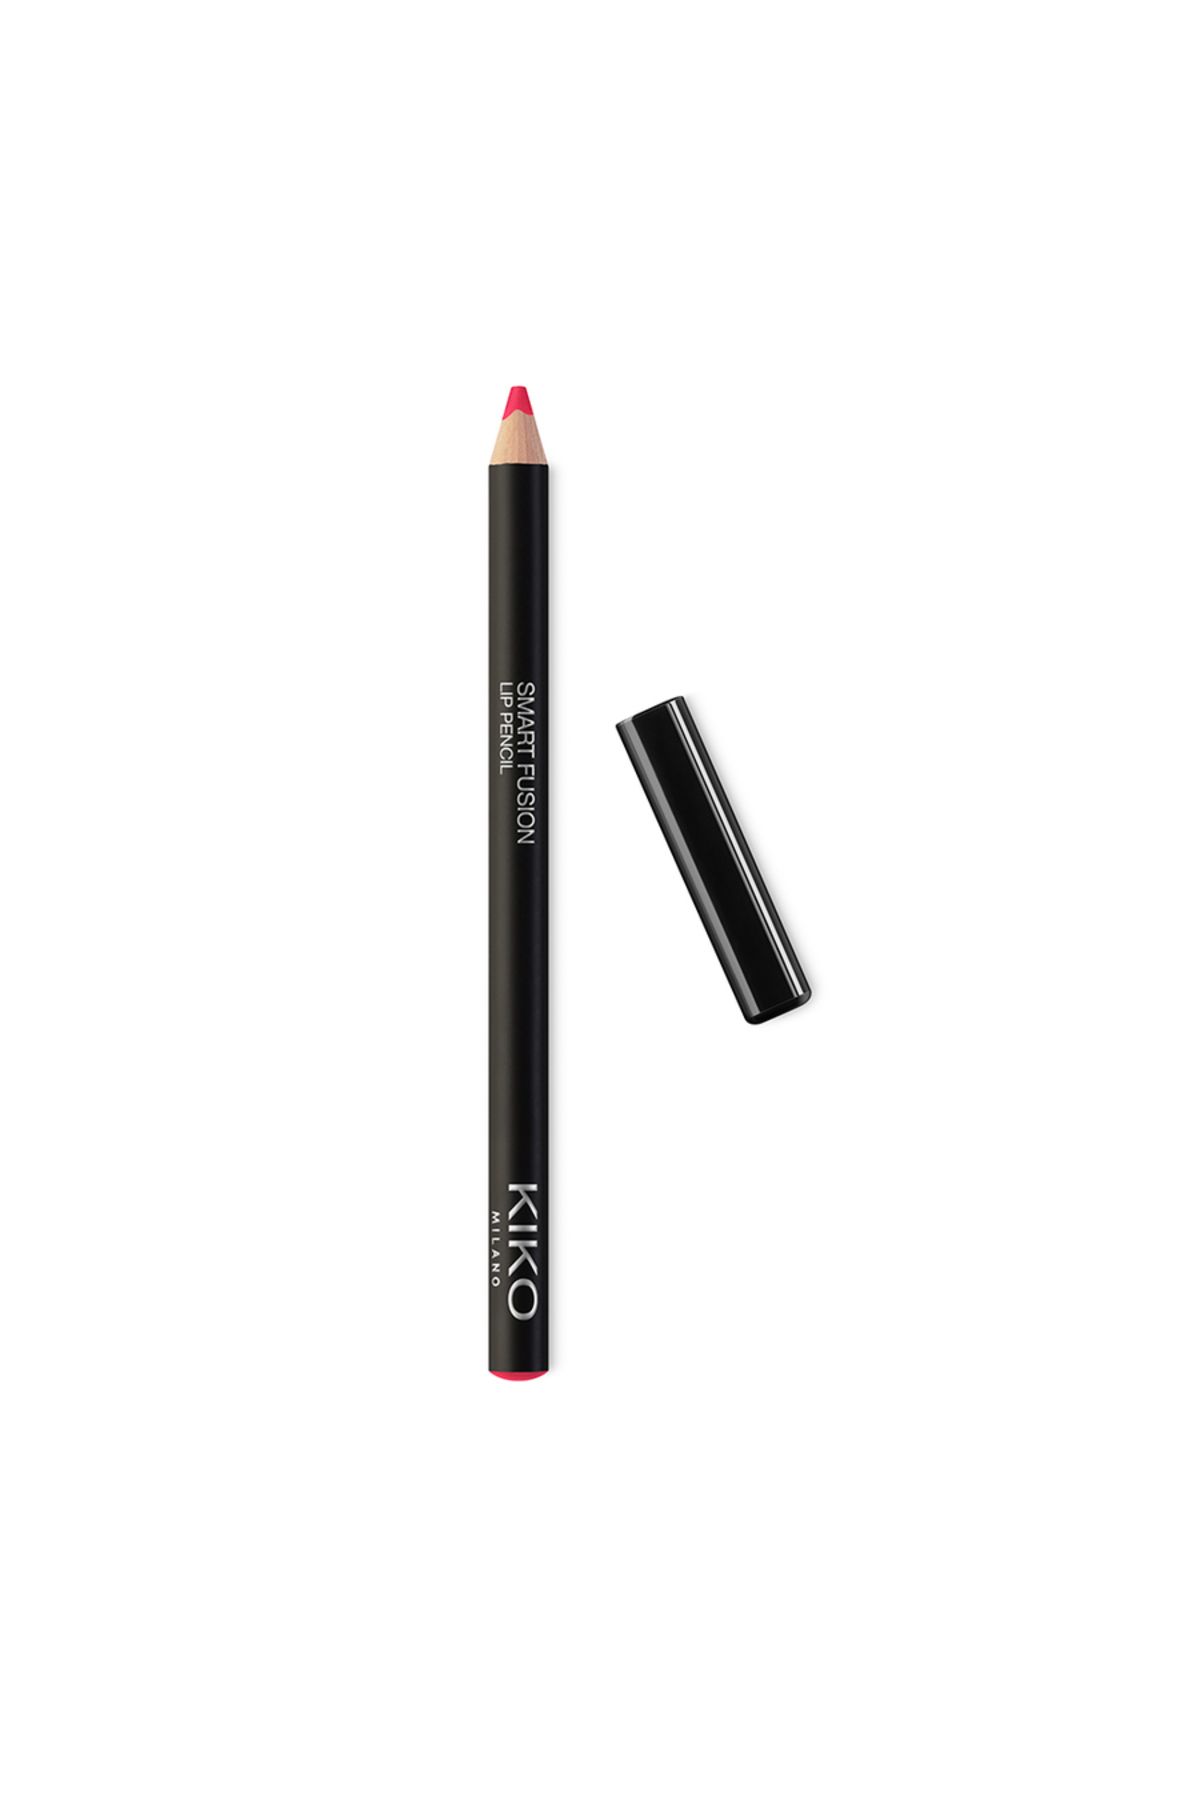 KIKO DUDAK KALEMİ - Smart Fusion Lip Pencil - 522 Crimson Red